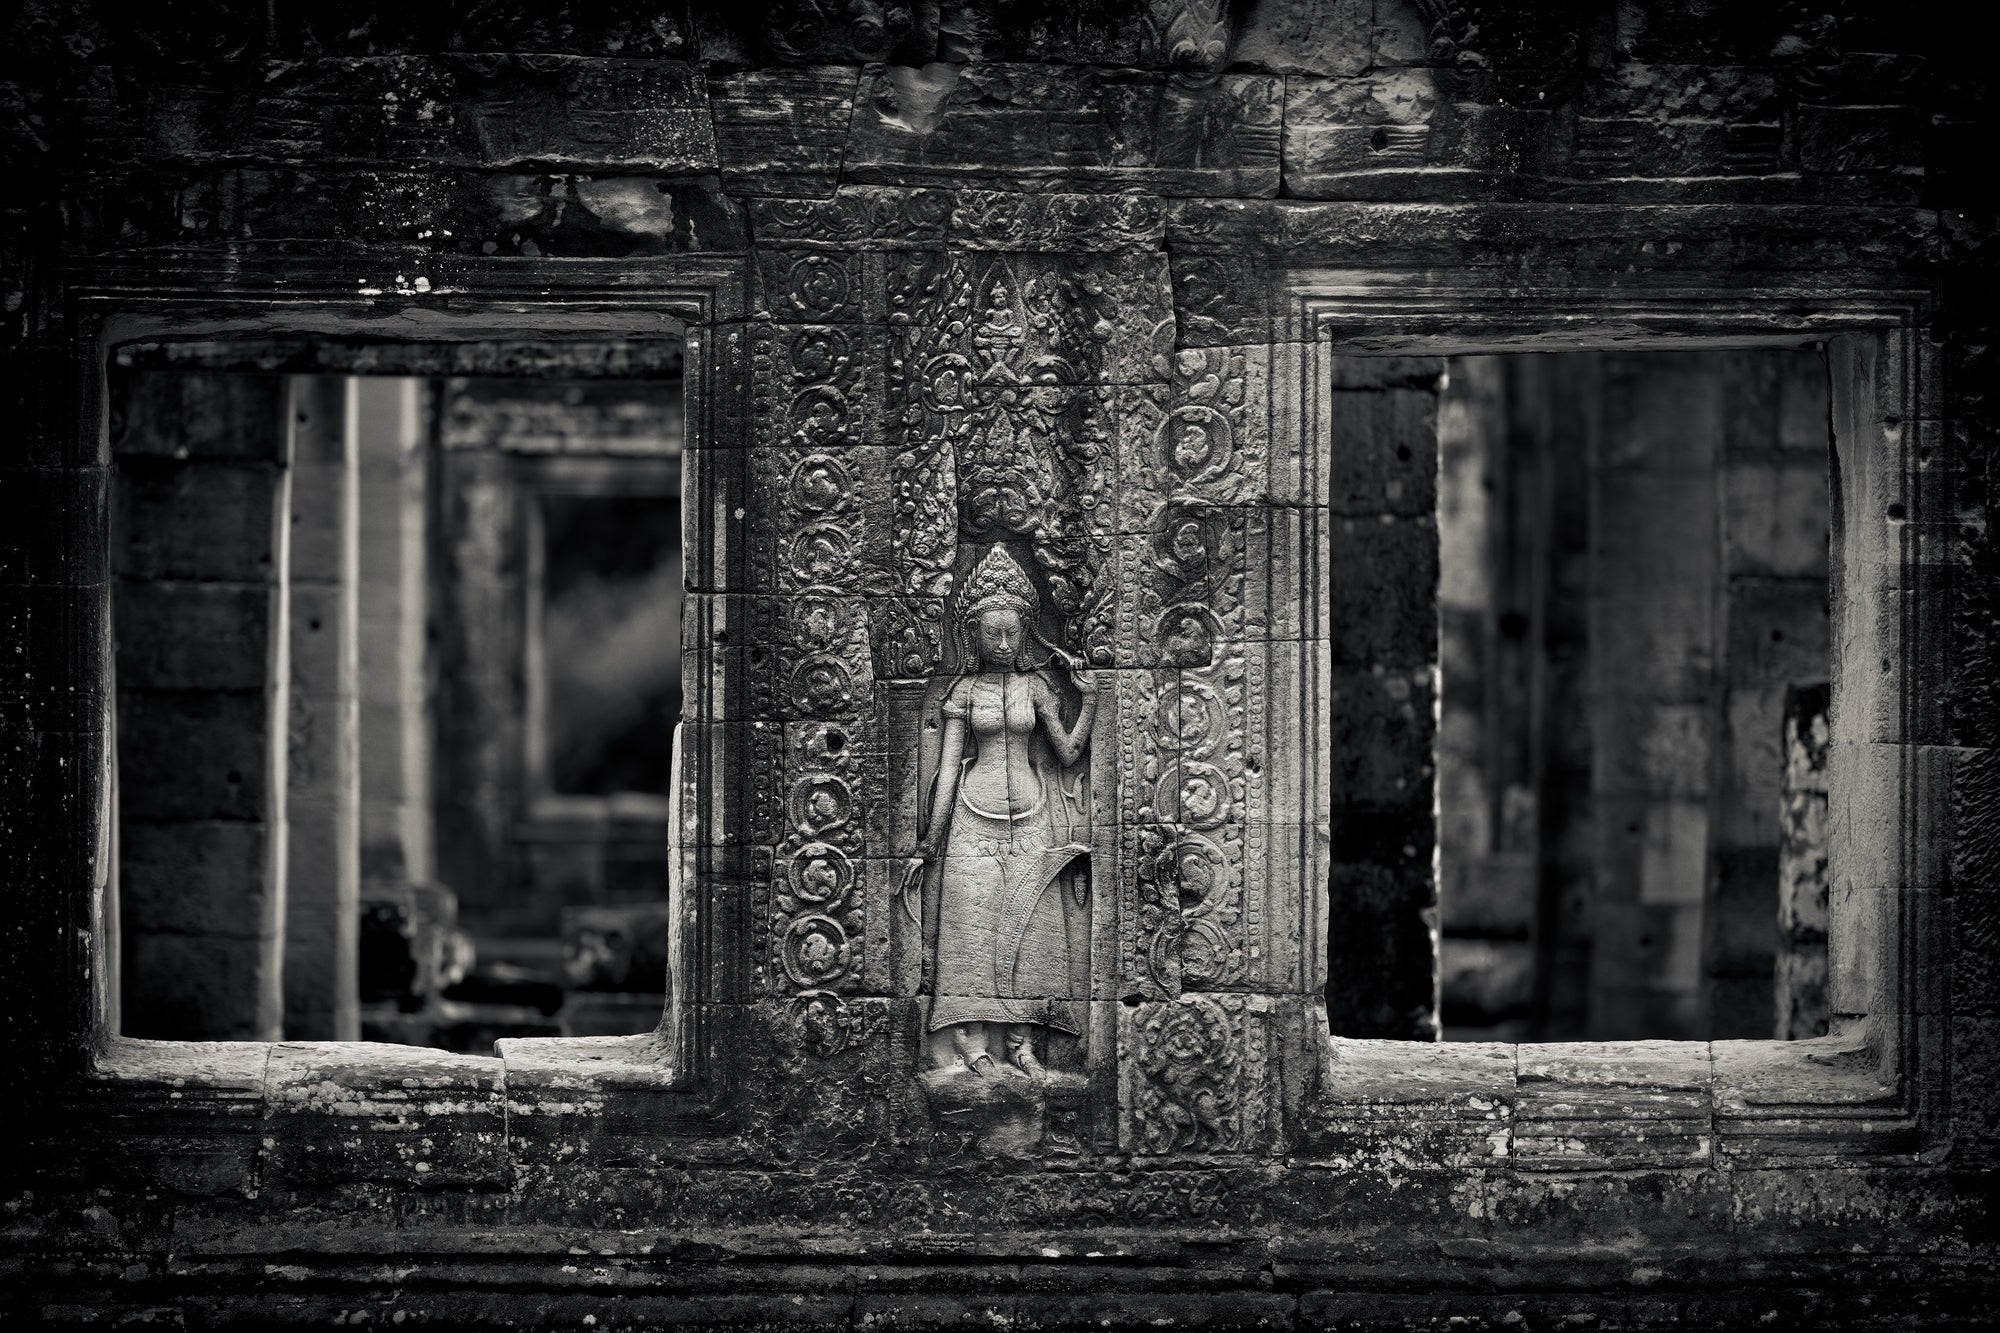 Apsara (Devata) and Buddha, Banteay Kdei Temple, Angkor, Cambodia